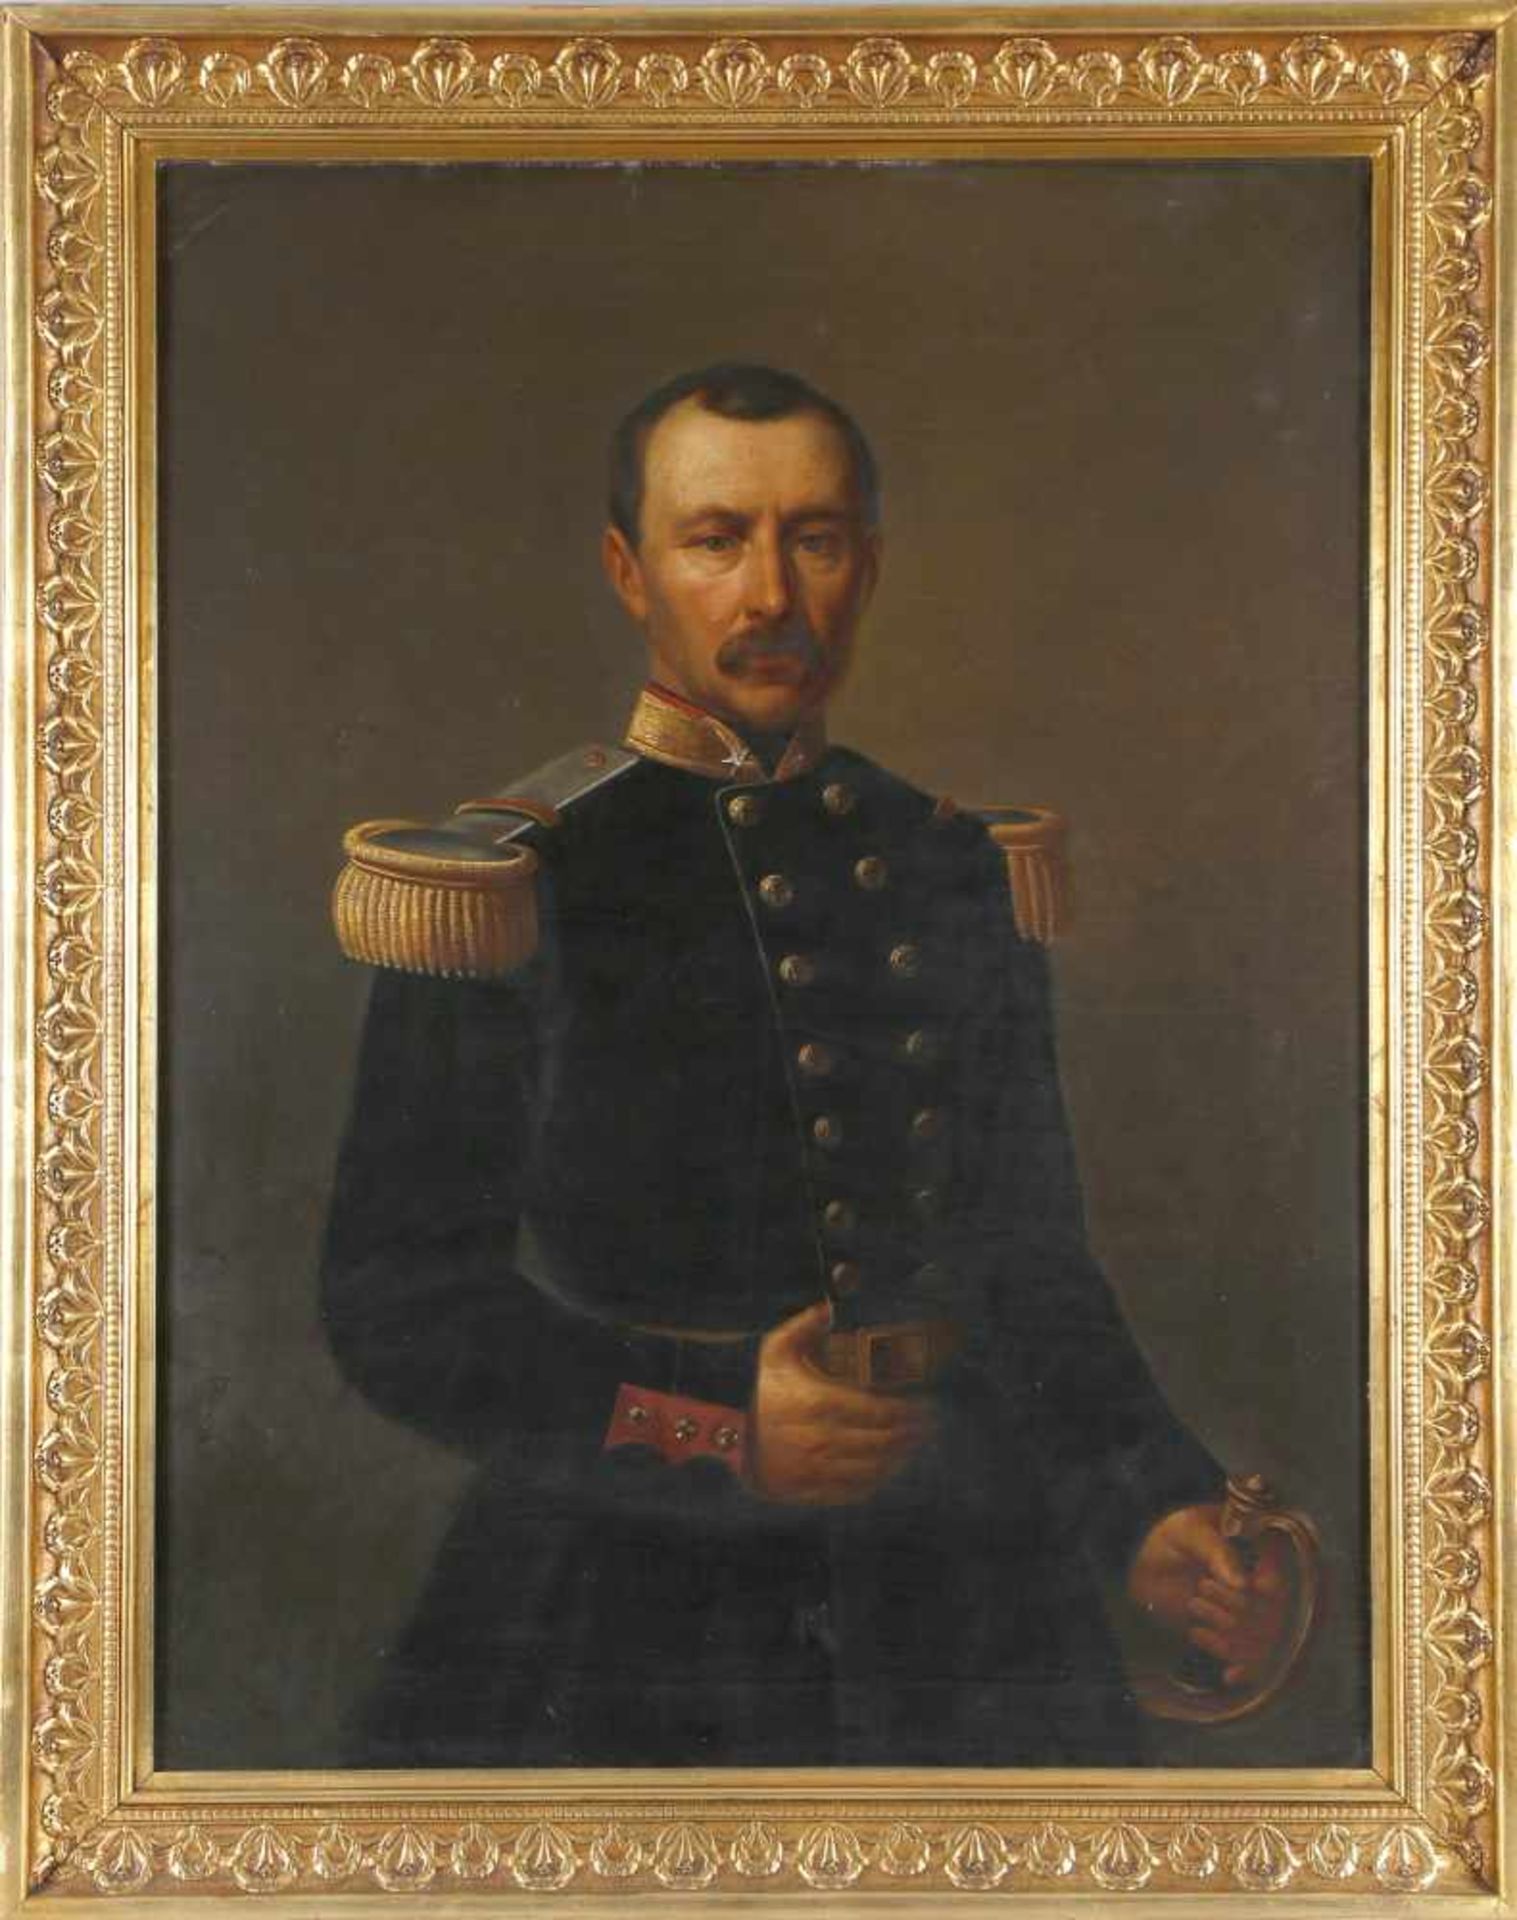 Porträt eines Militärs (Hüftbild), um 1900100 x 74 cm, im etwas späteren vergoldeten Stuckrahmen (um